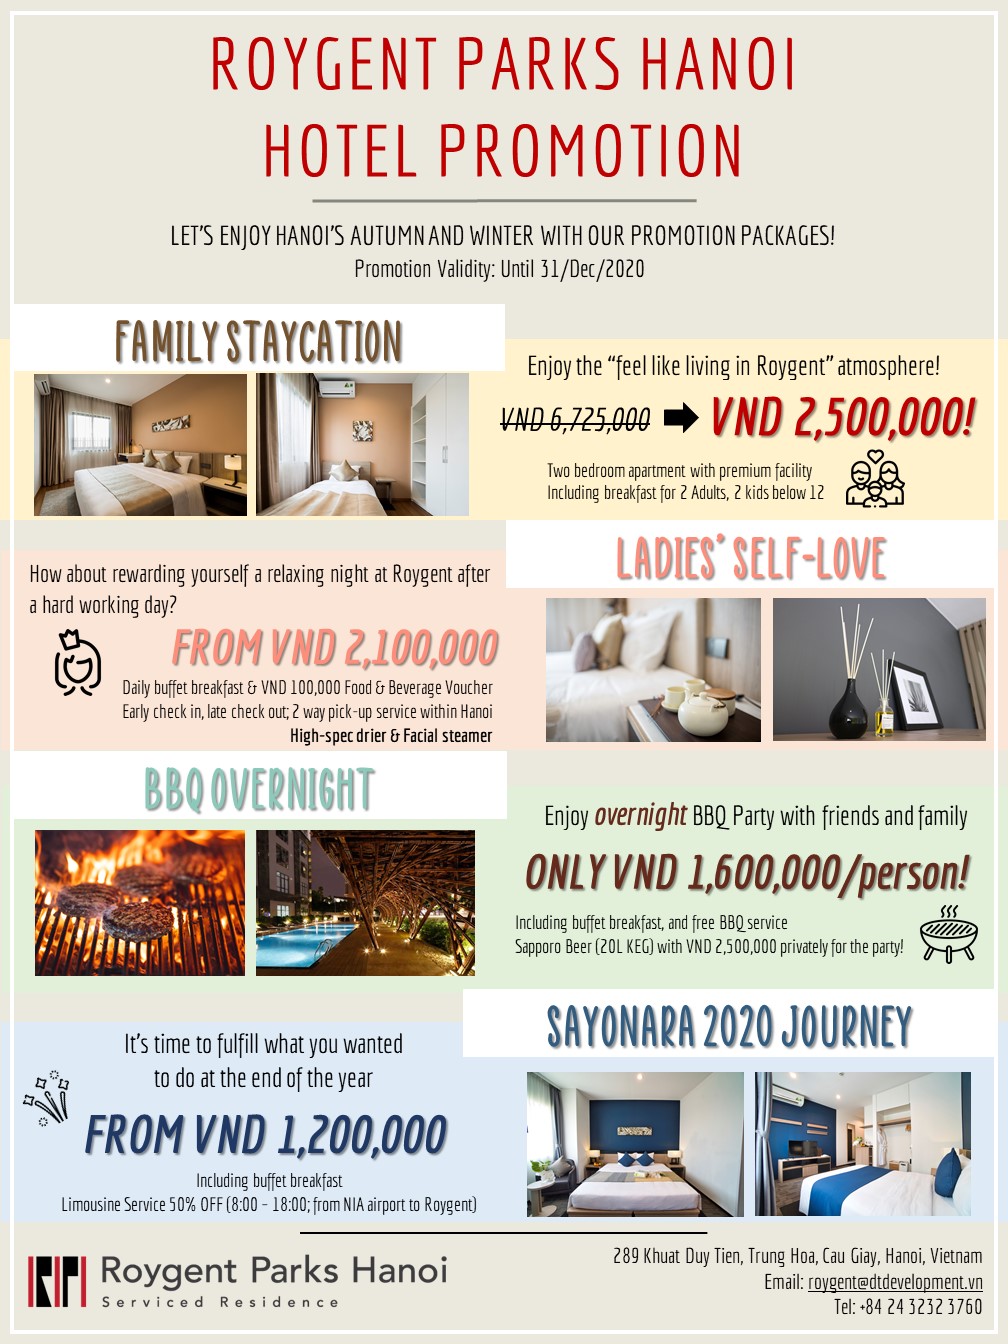 Hotel promotion 2020!｜News detail Roygent Parks Hanoi｜Hotel